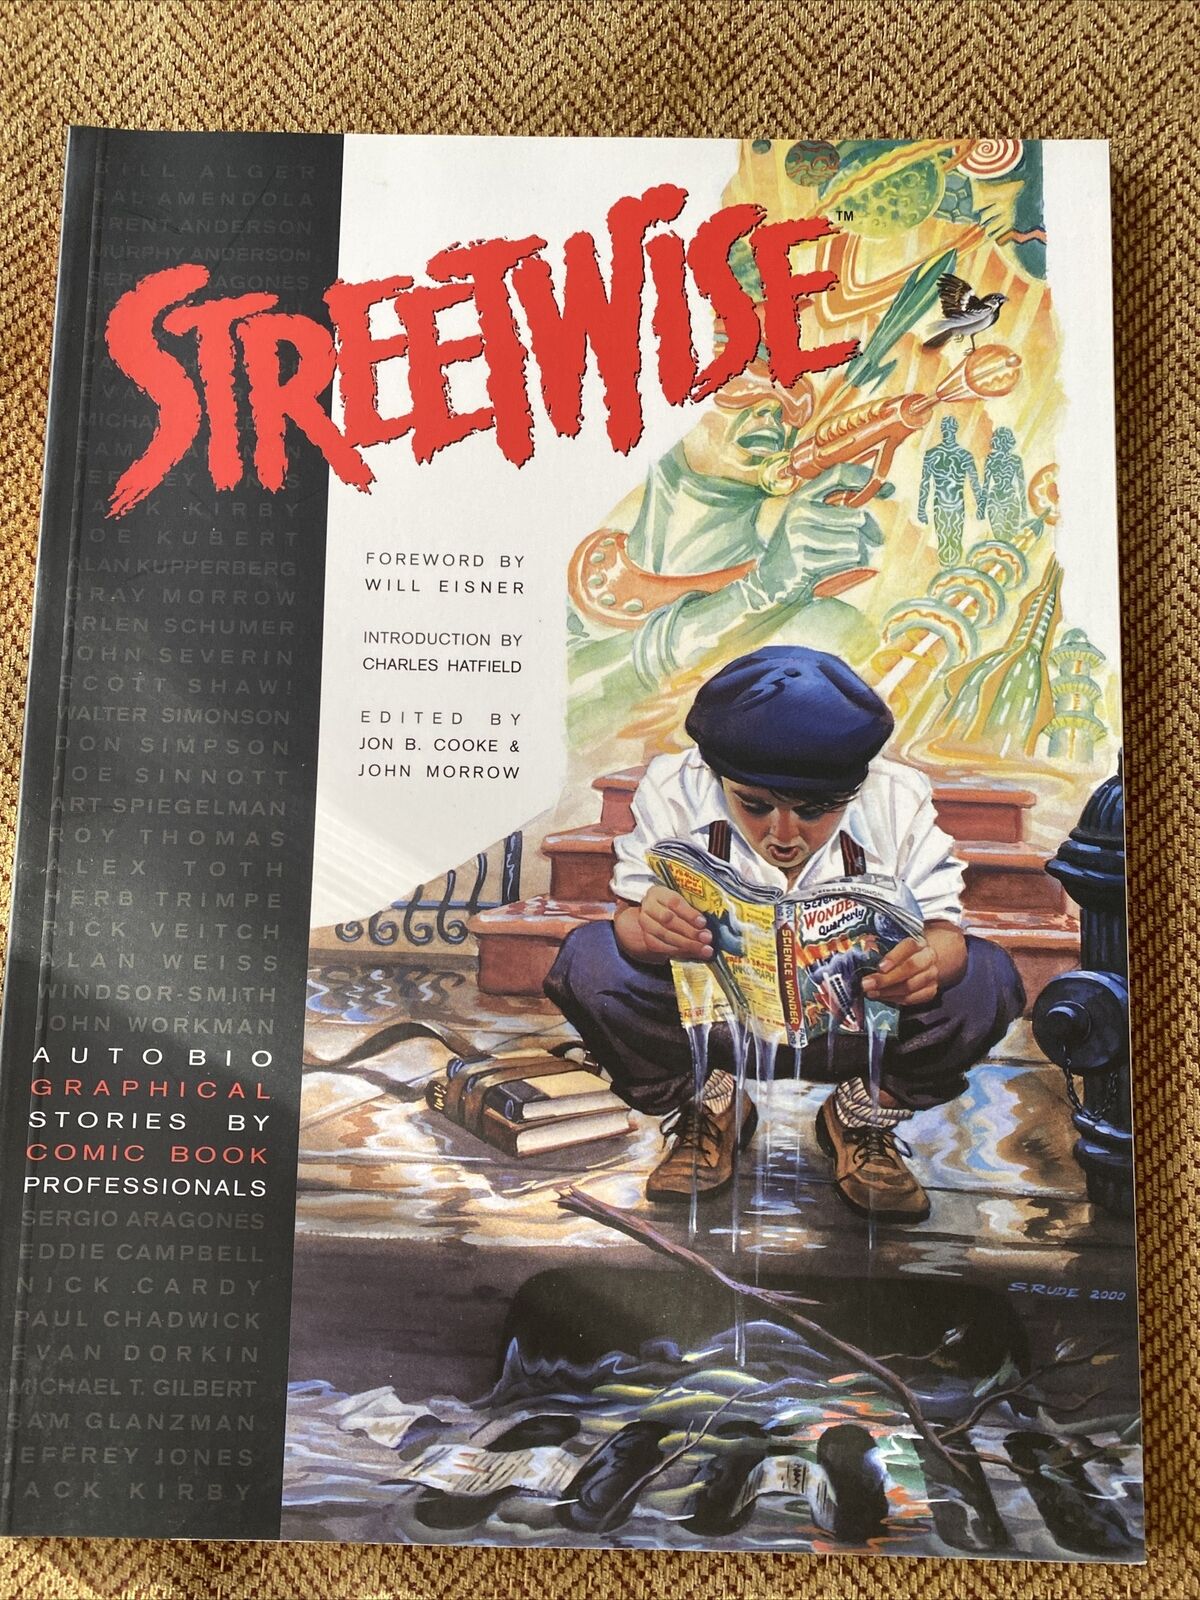 Streetwise (TwoMorrows Publishing, July 2000)